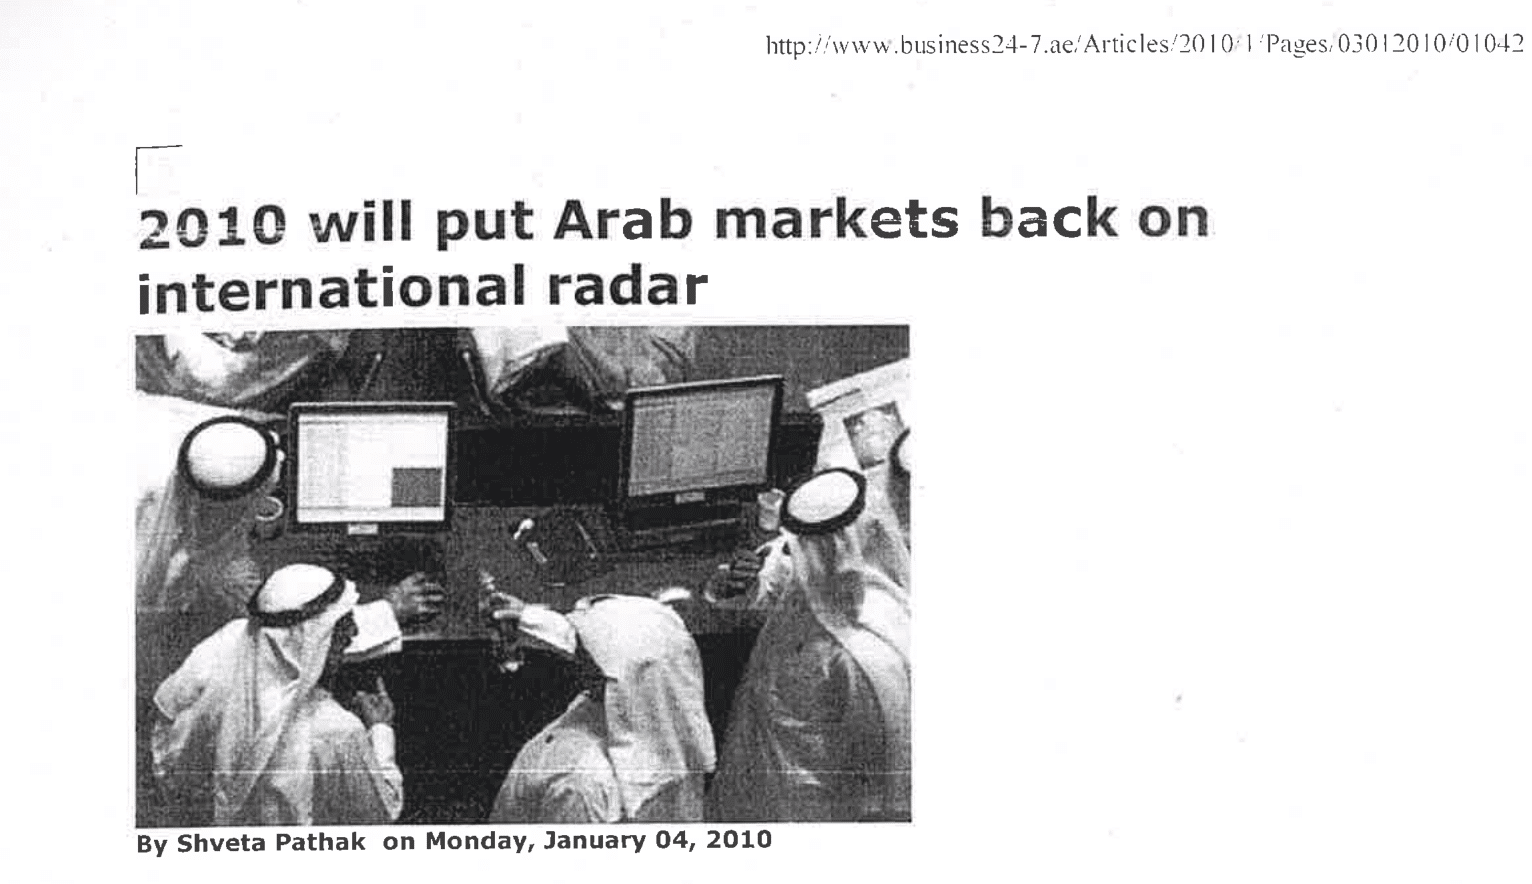 2010 will put Arab markets back on international radar